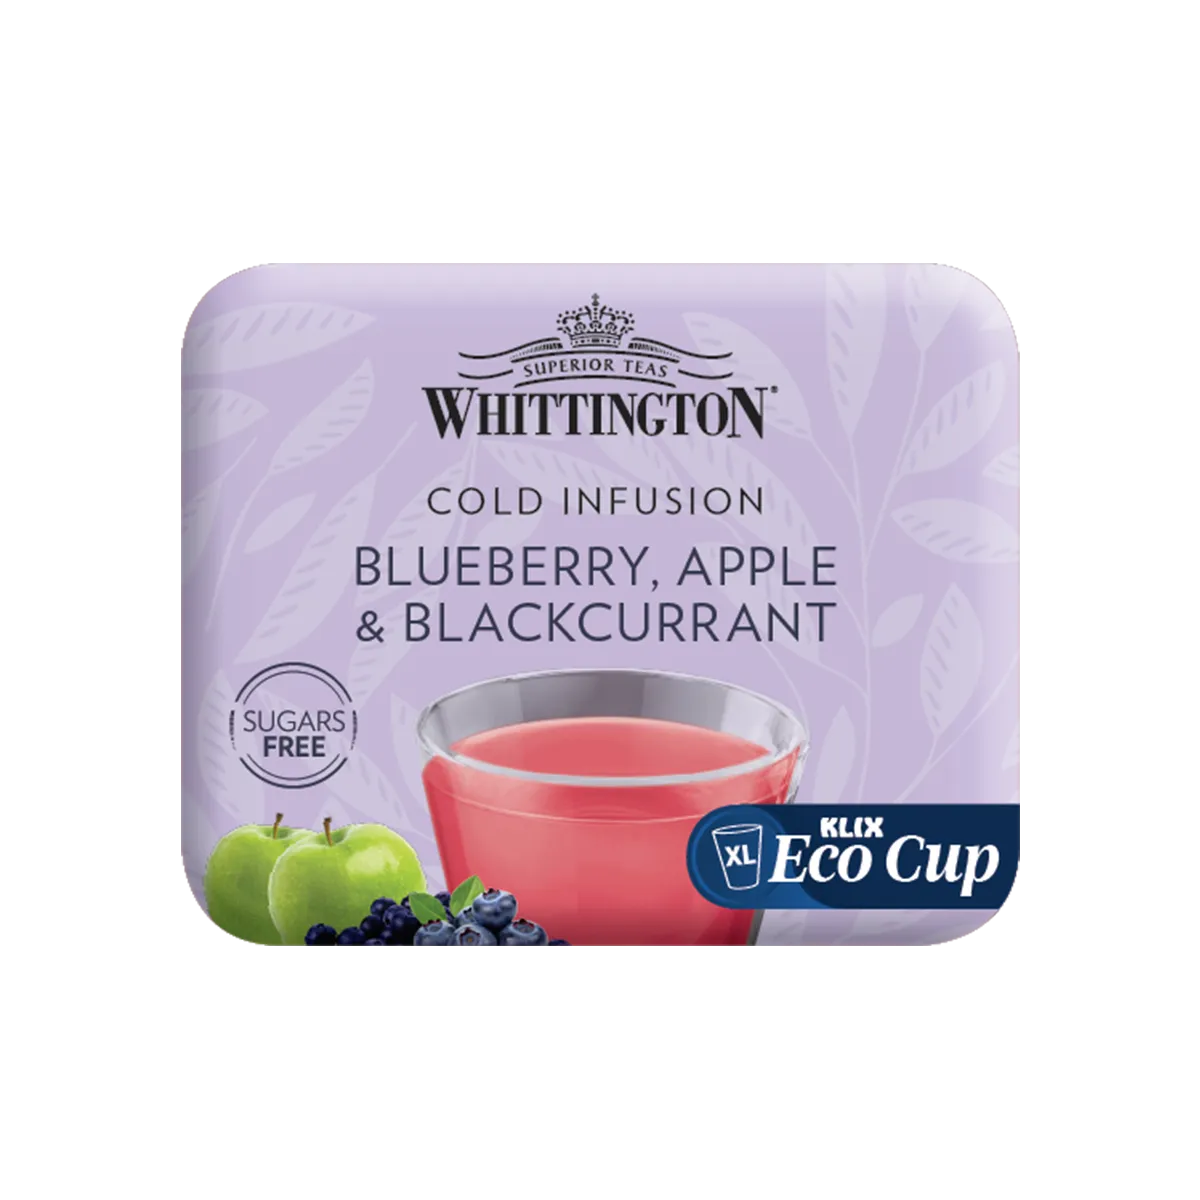 Whittington Blueberry, Apple & Blackcurrant Cold Infusion - 48522